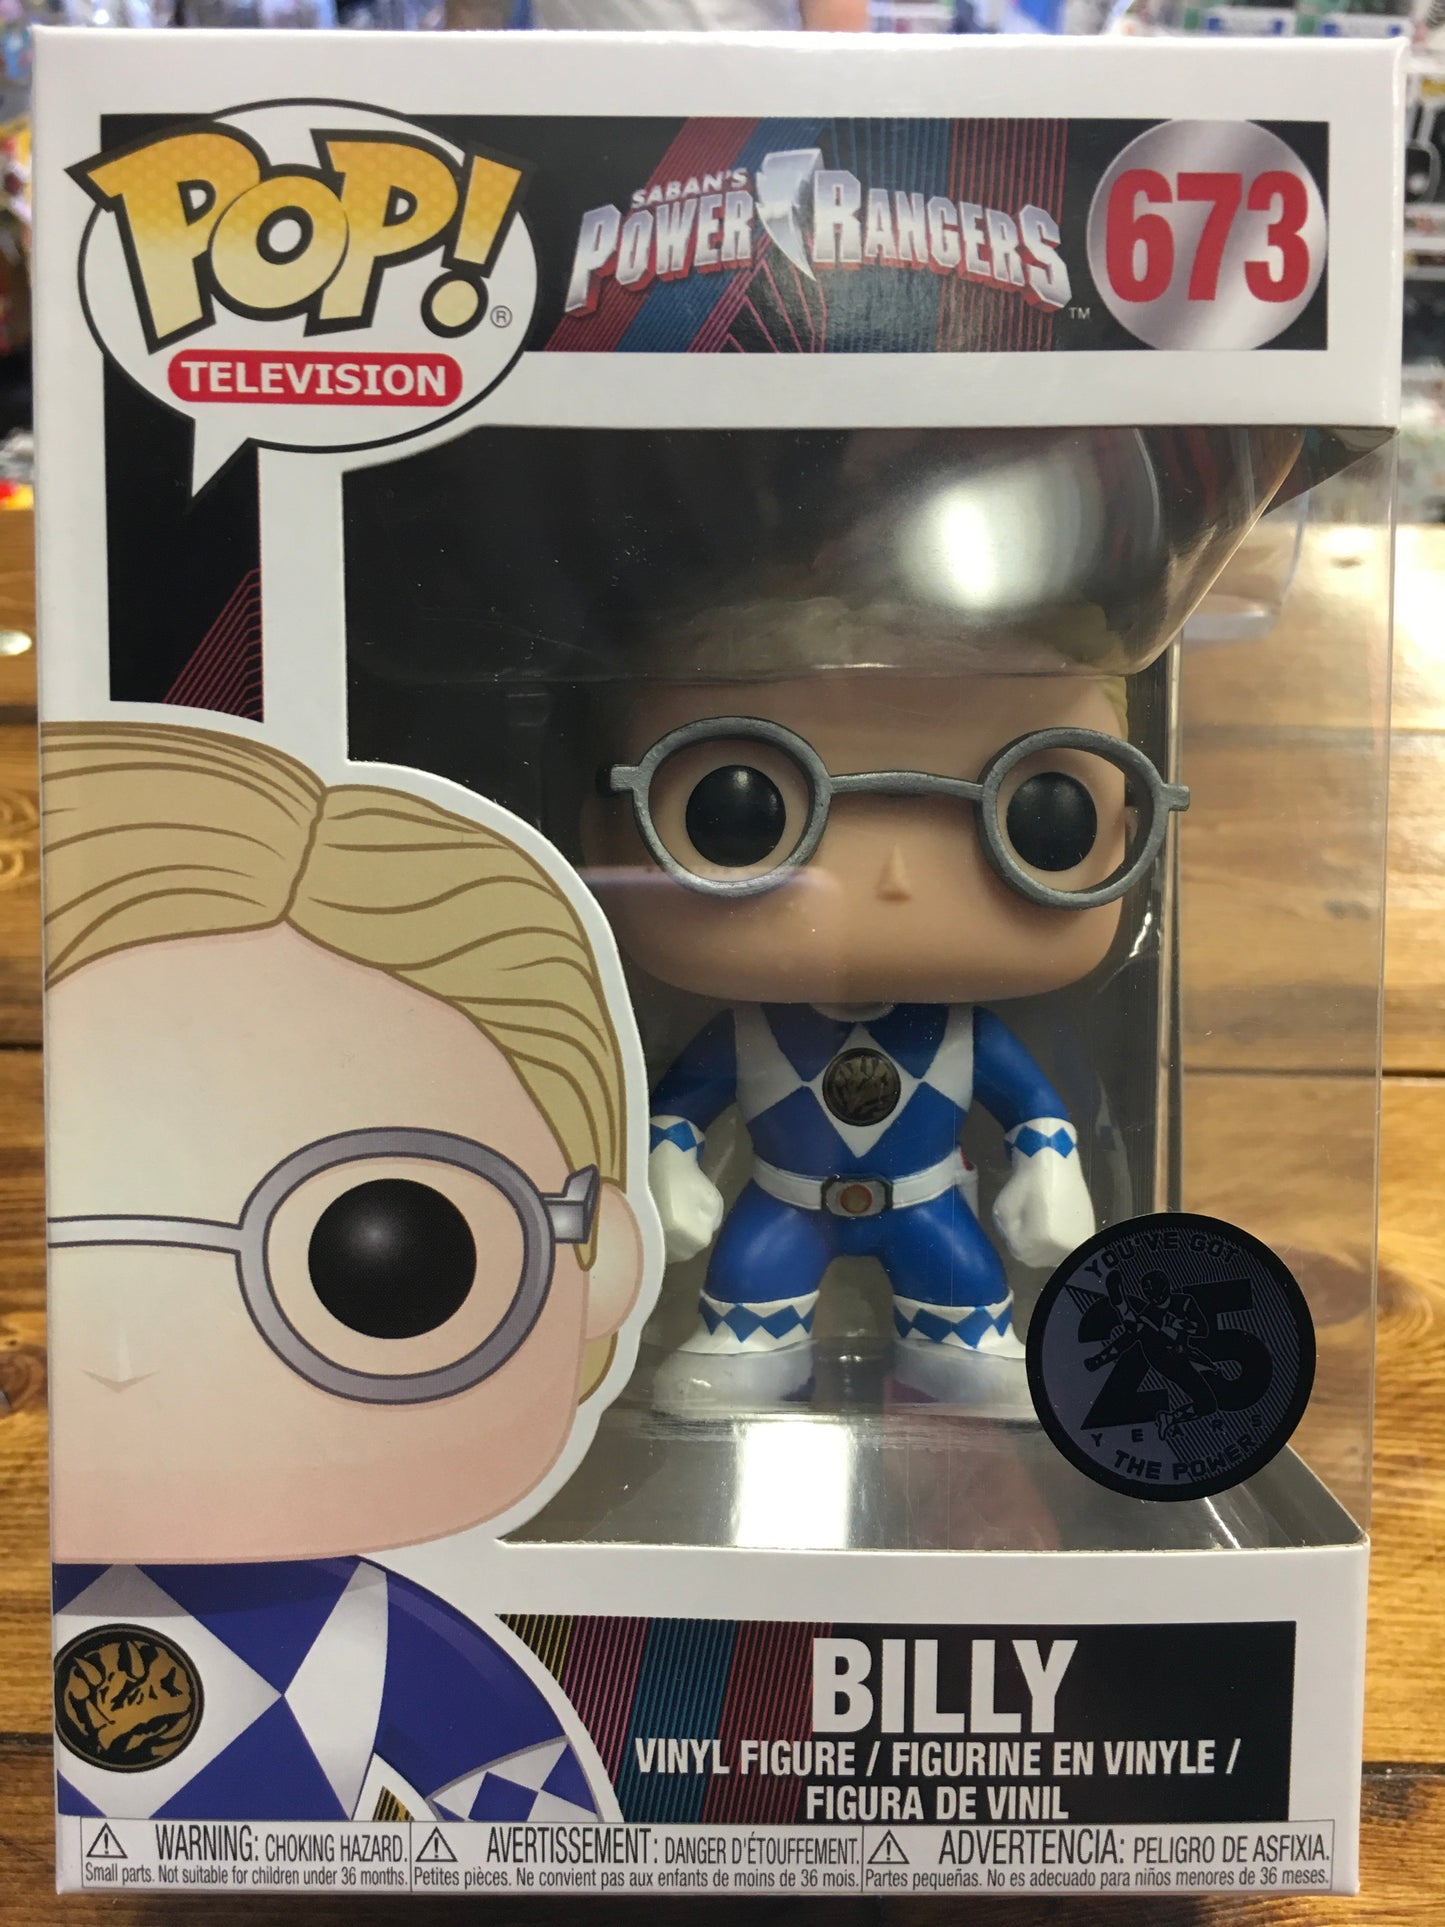 Power Rangers Billy #673 Television Funko Pop! Vinyl Figure